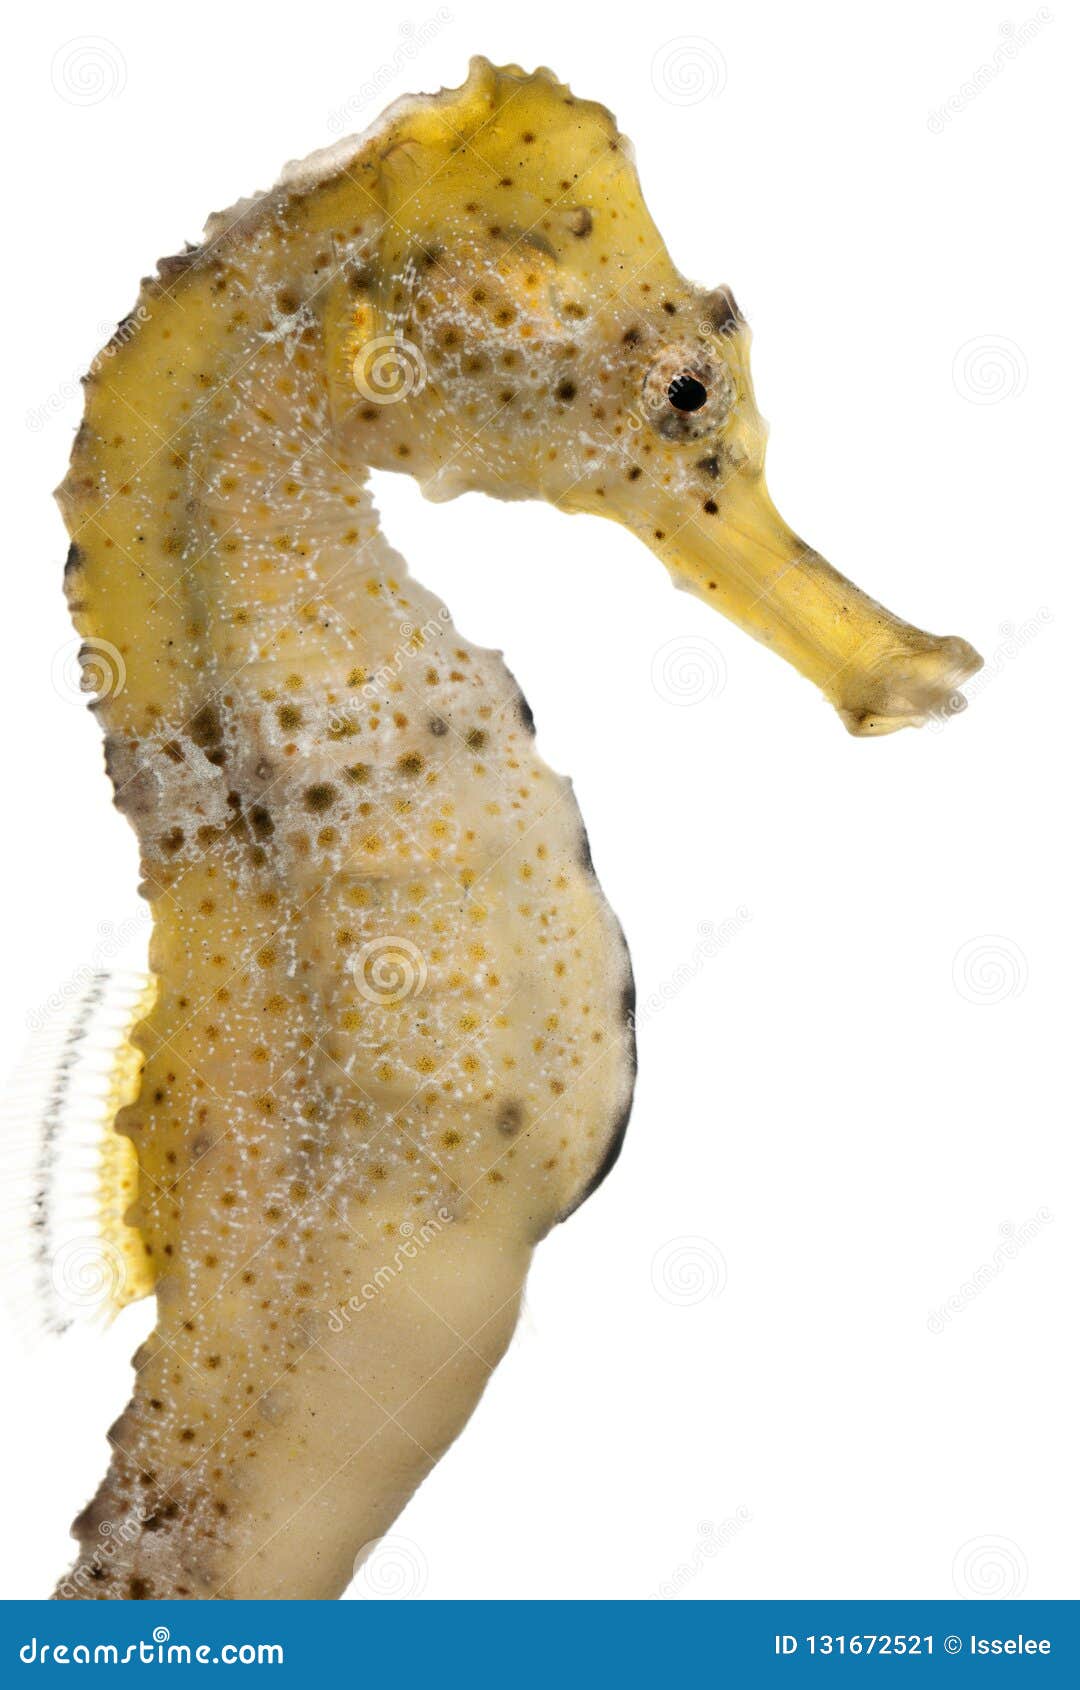 longsnout seahorse or slender seahorse, hippocampus reidi yellowish